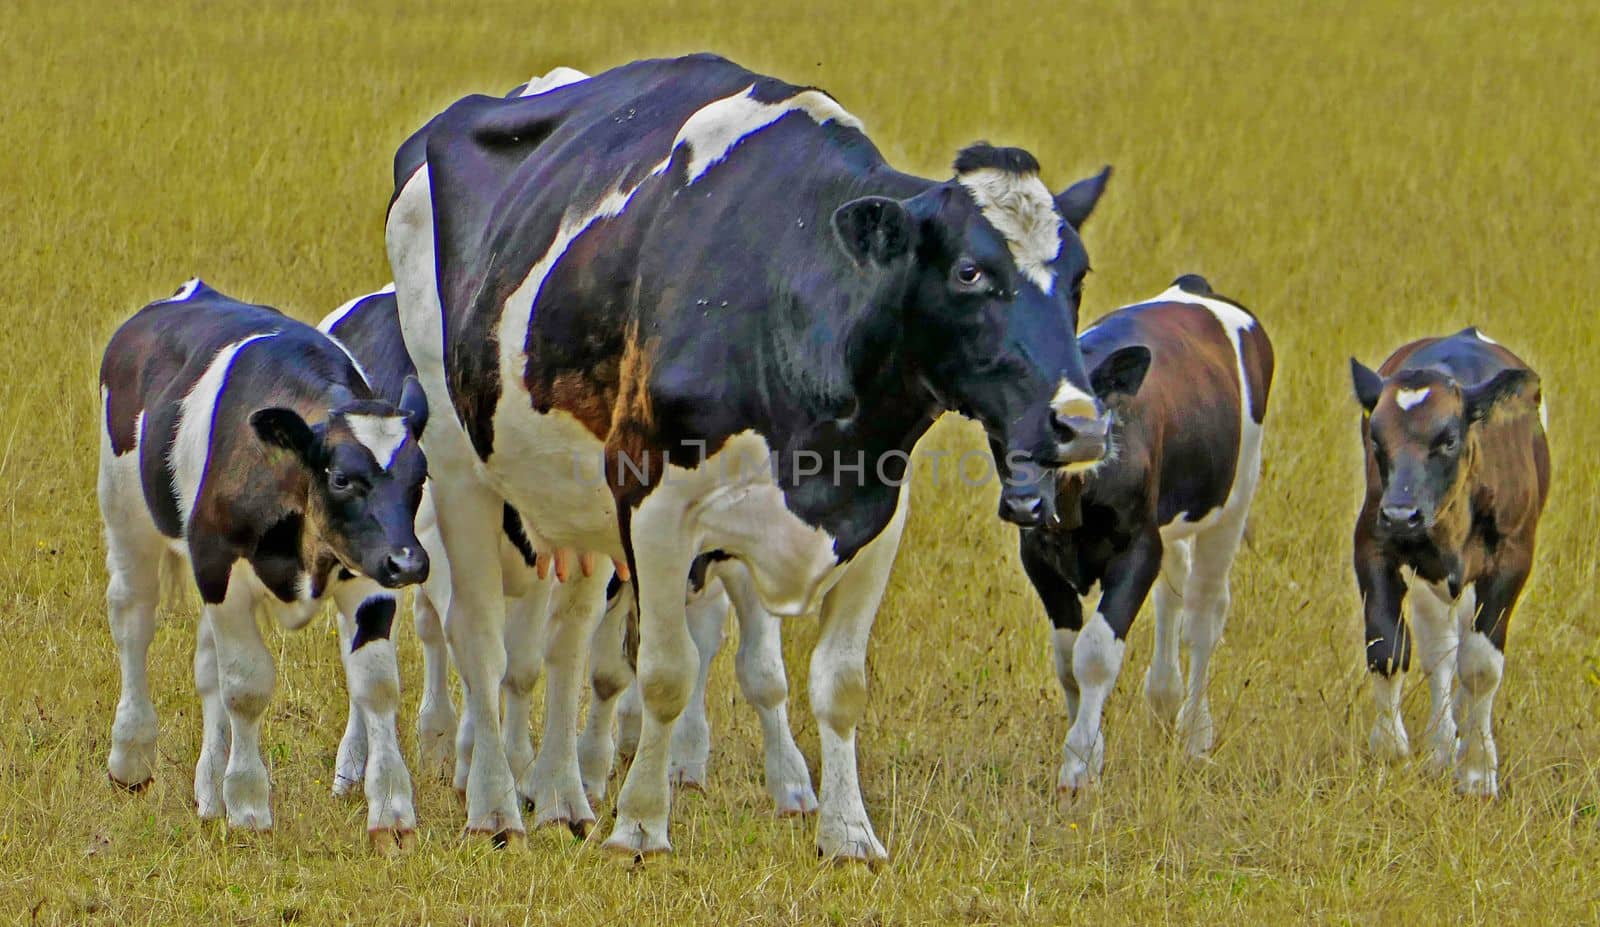 Cow and calves by WielandTeixeira